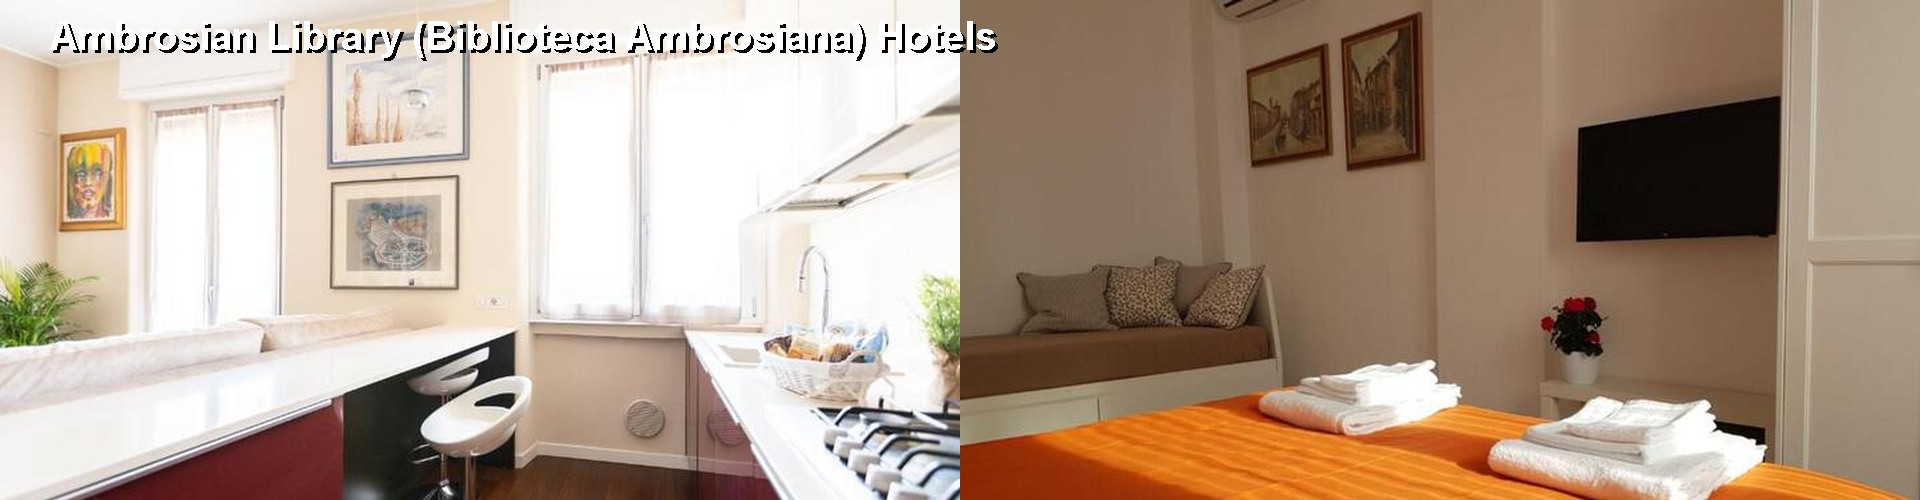 5 Best Hotels near Ambrosian Library (Biblioteca Ambrosiana)